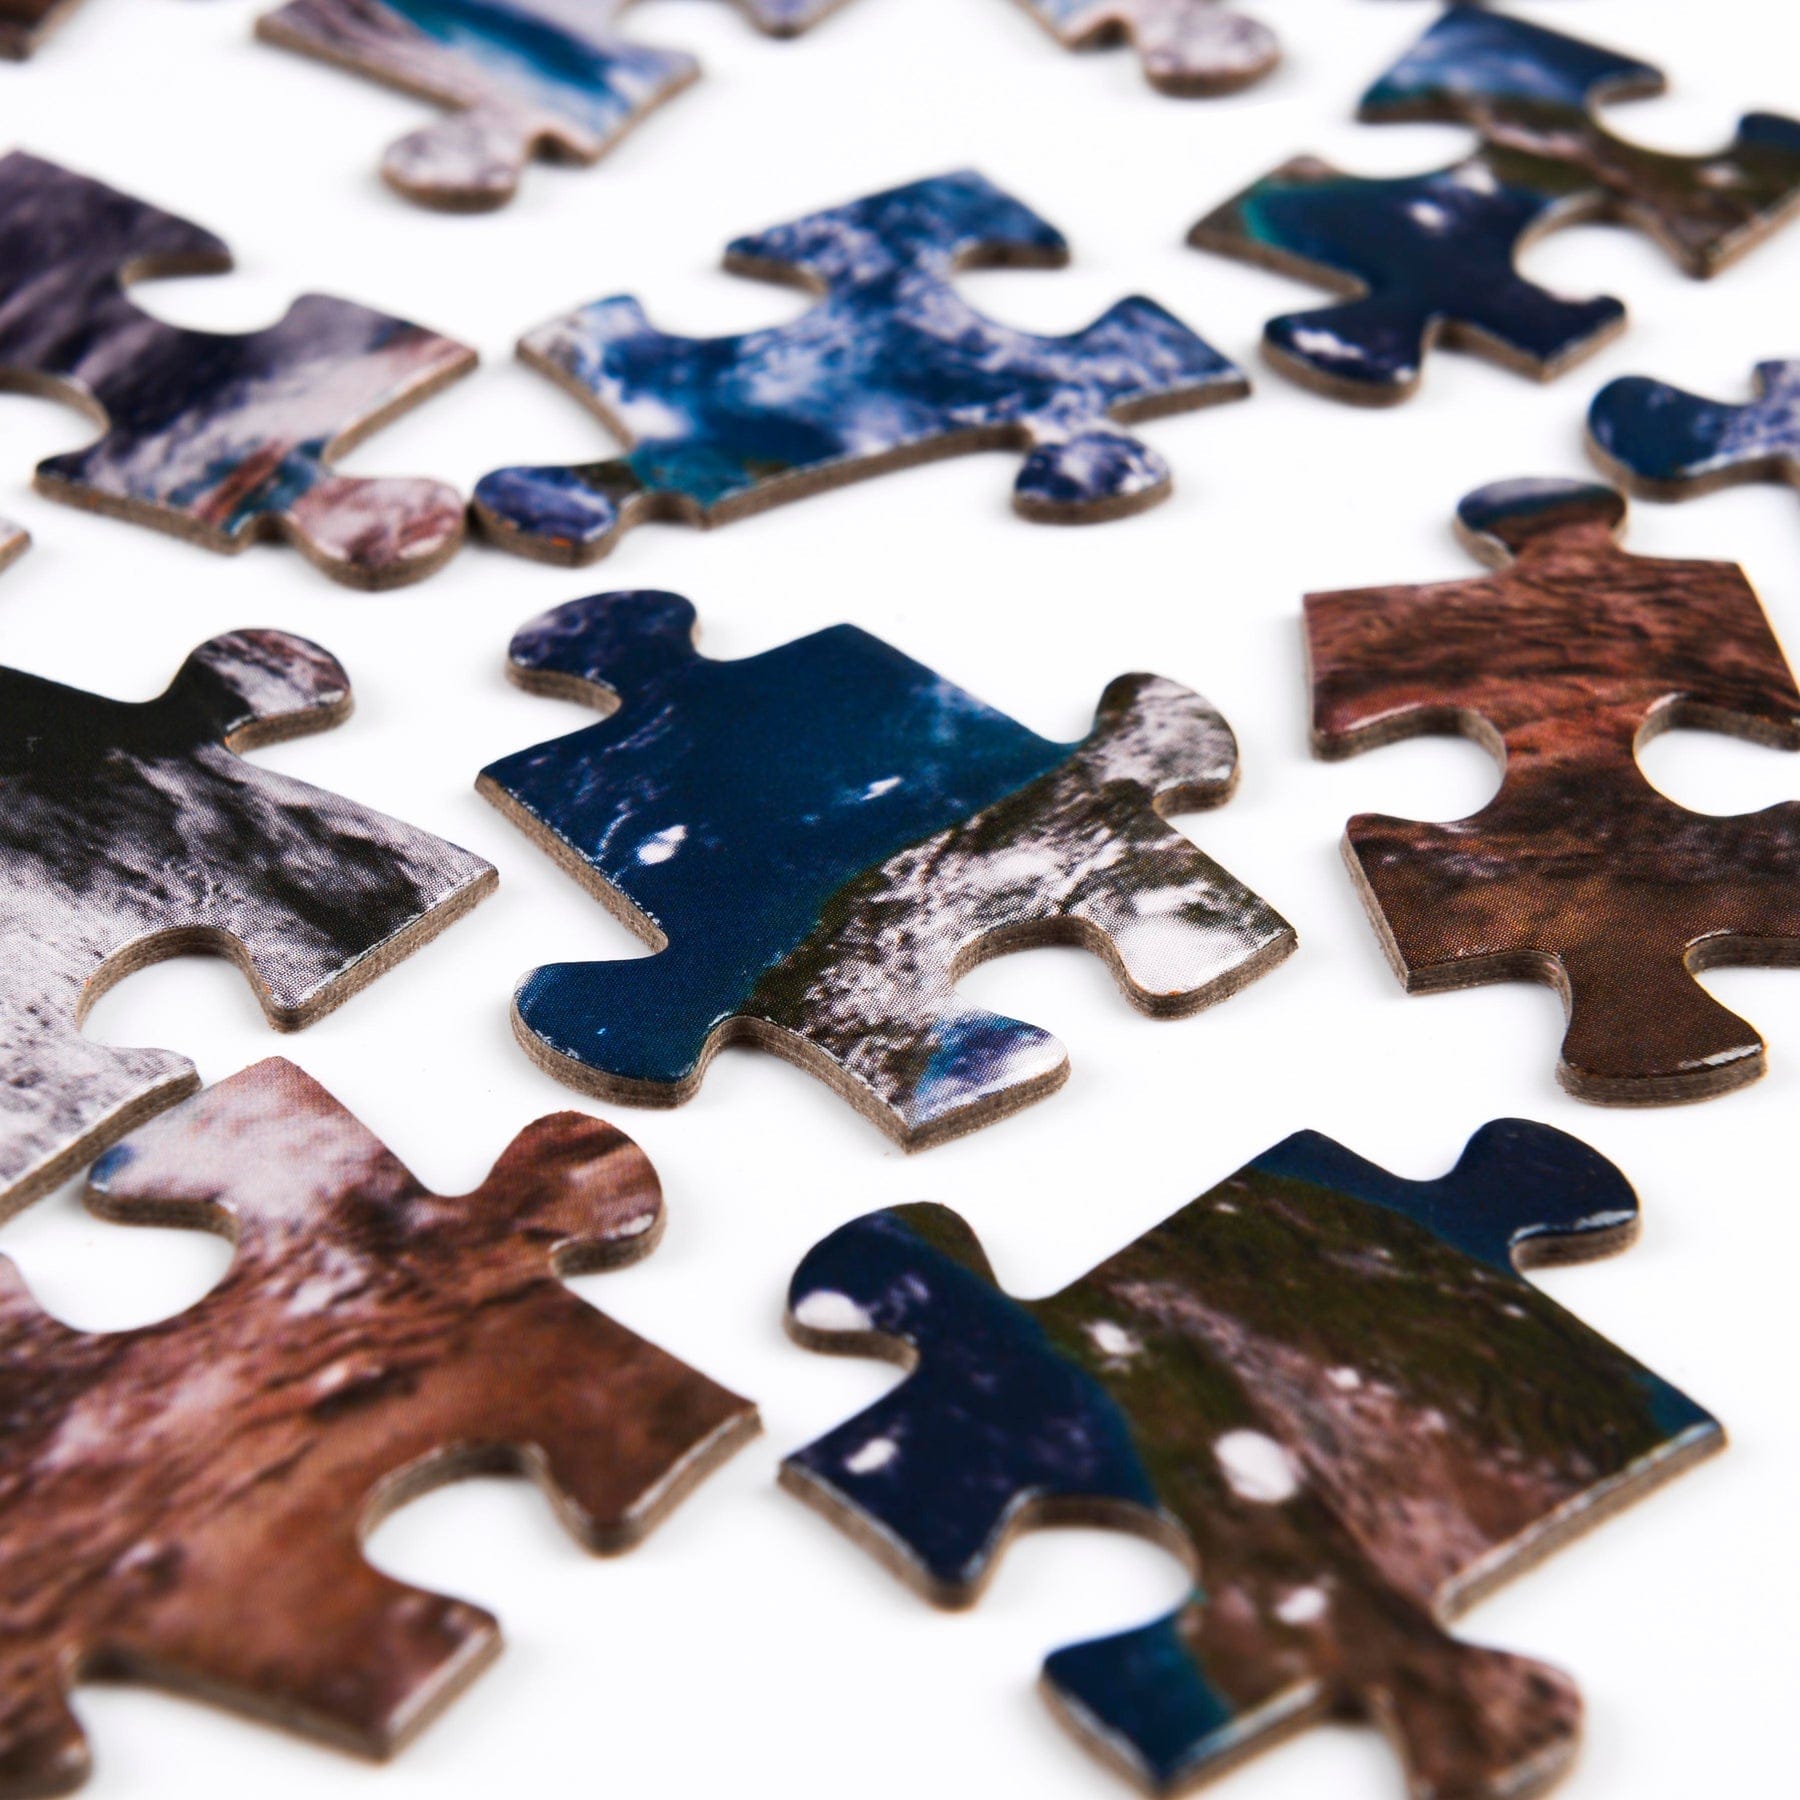 World Pieces - Mini Puzzle - 250 Piece